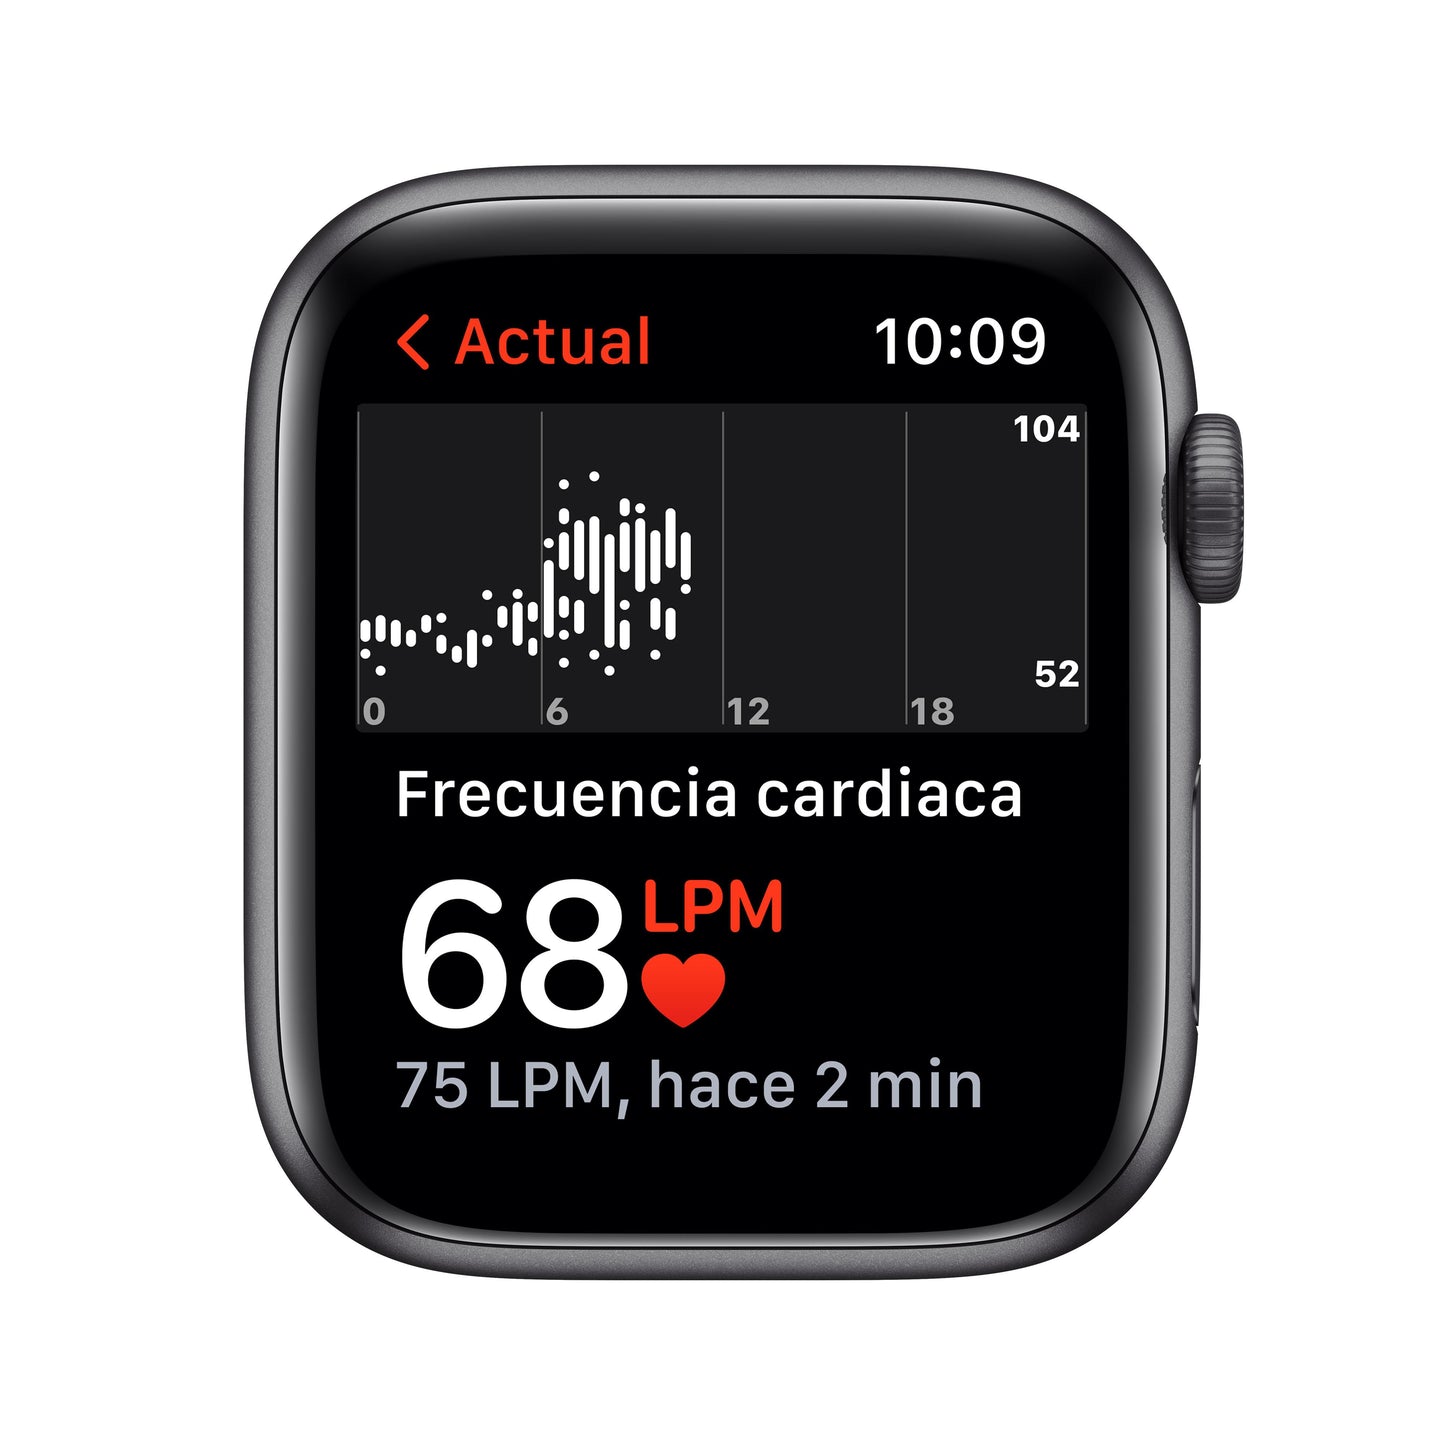 Apple Watch Nike SE (GPS) - Caja de aluminio en gris espacial de 44 mm - Correa Nike Sport antracita/negra - Talla única